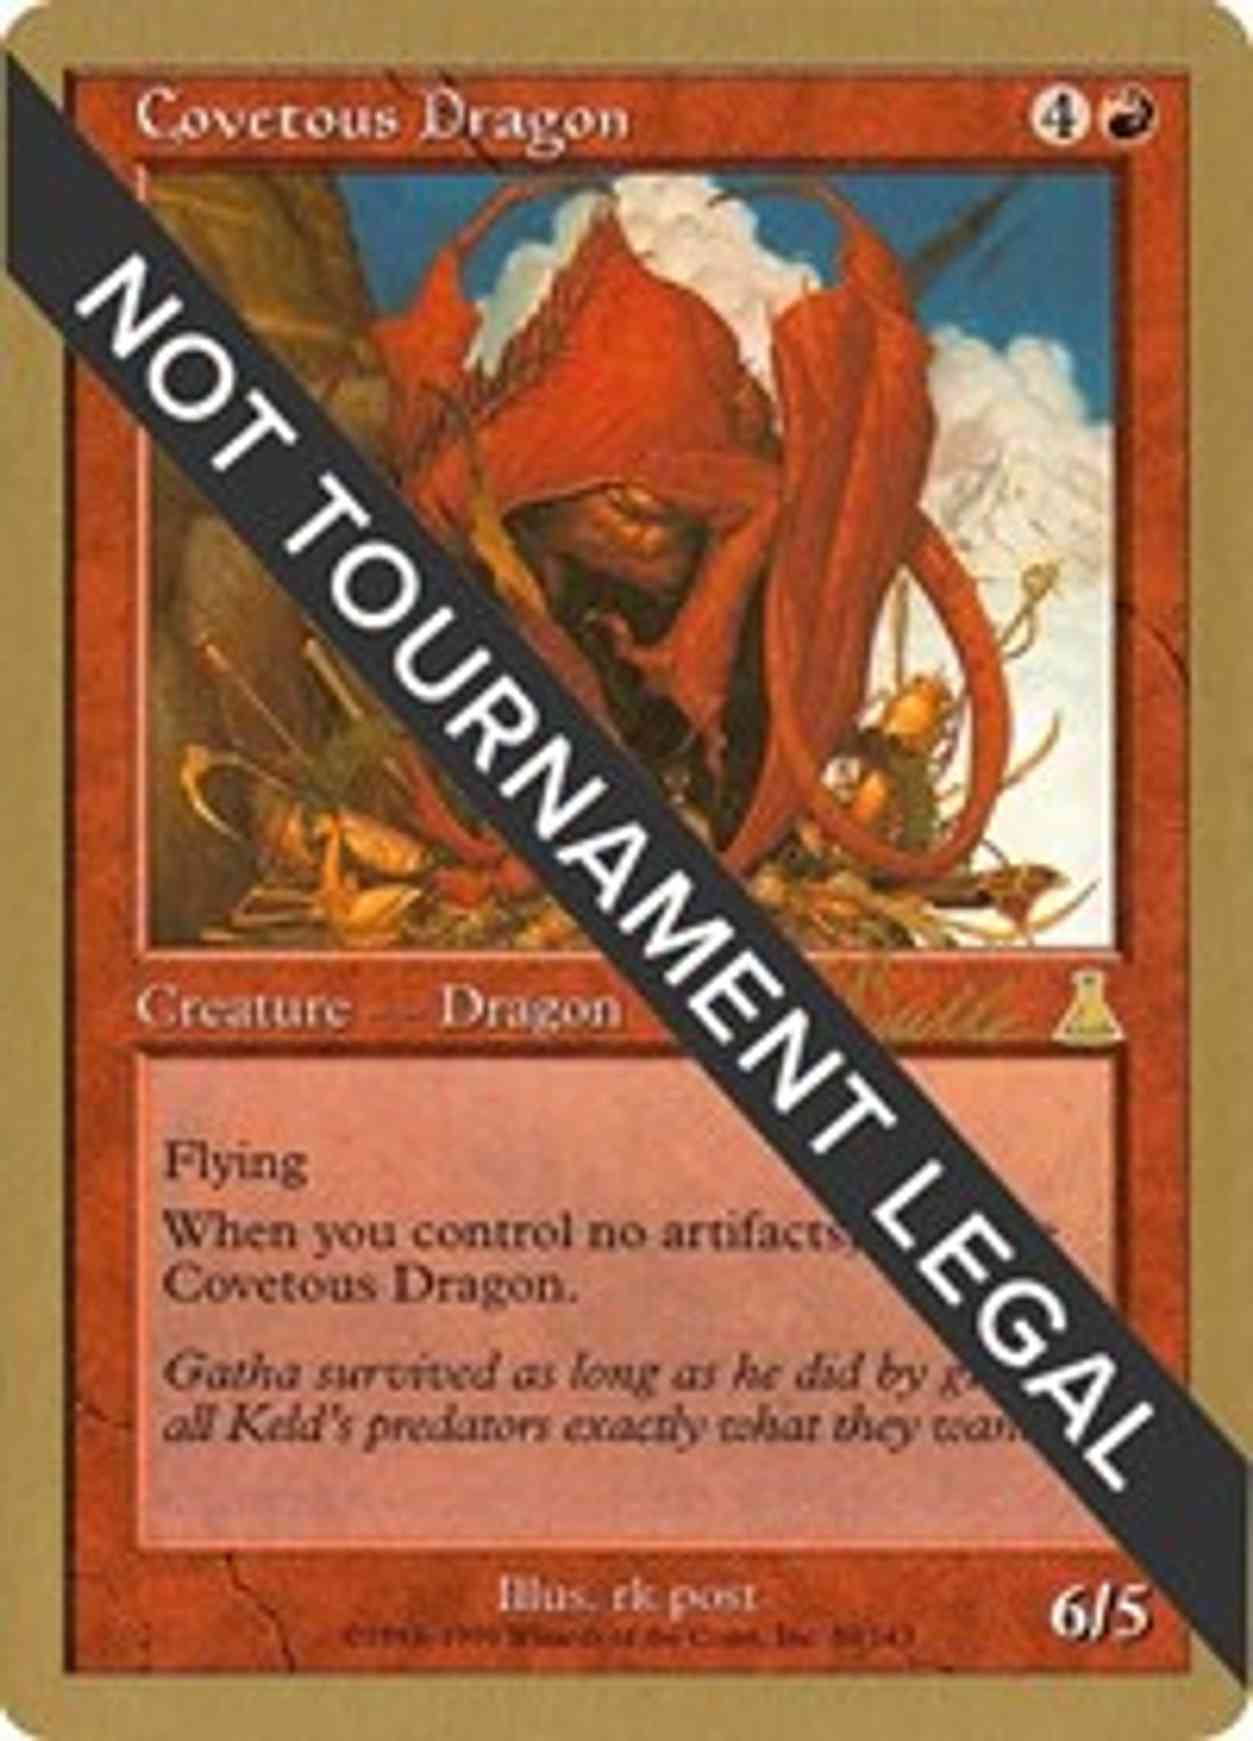 Covetous Dragon - 1999 Kai Budde (UDS) magic card front